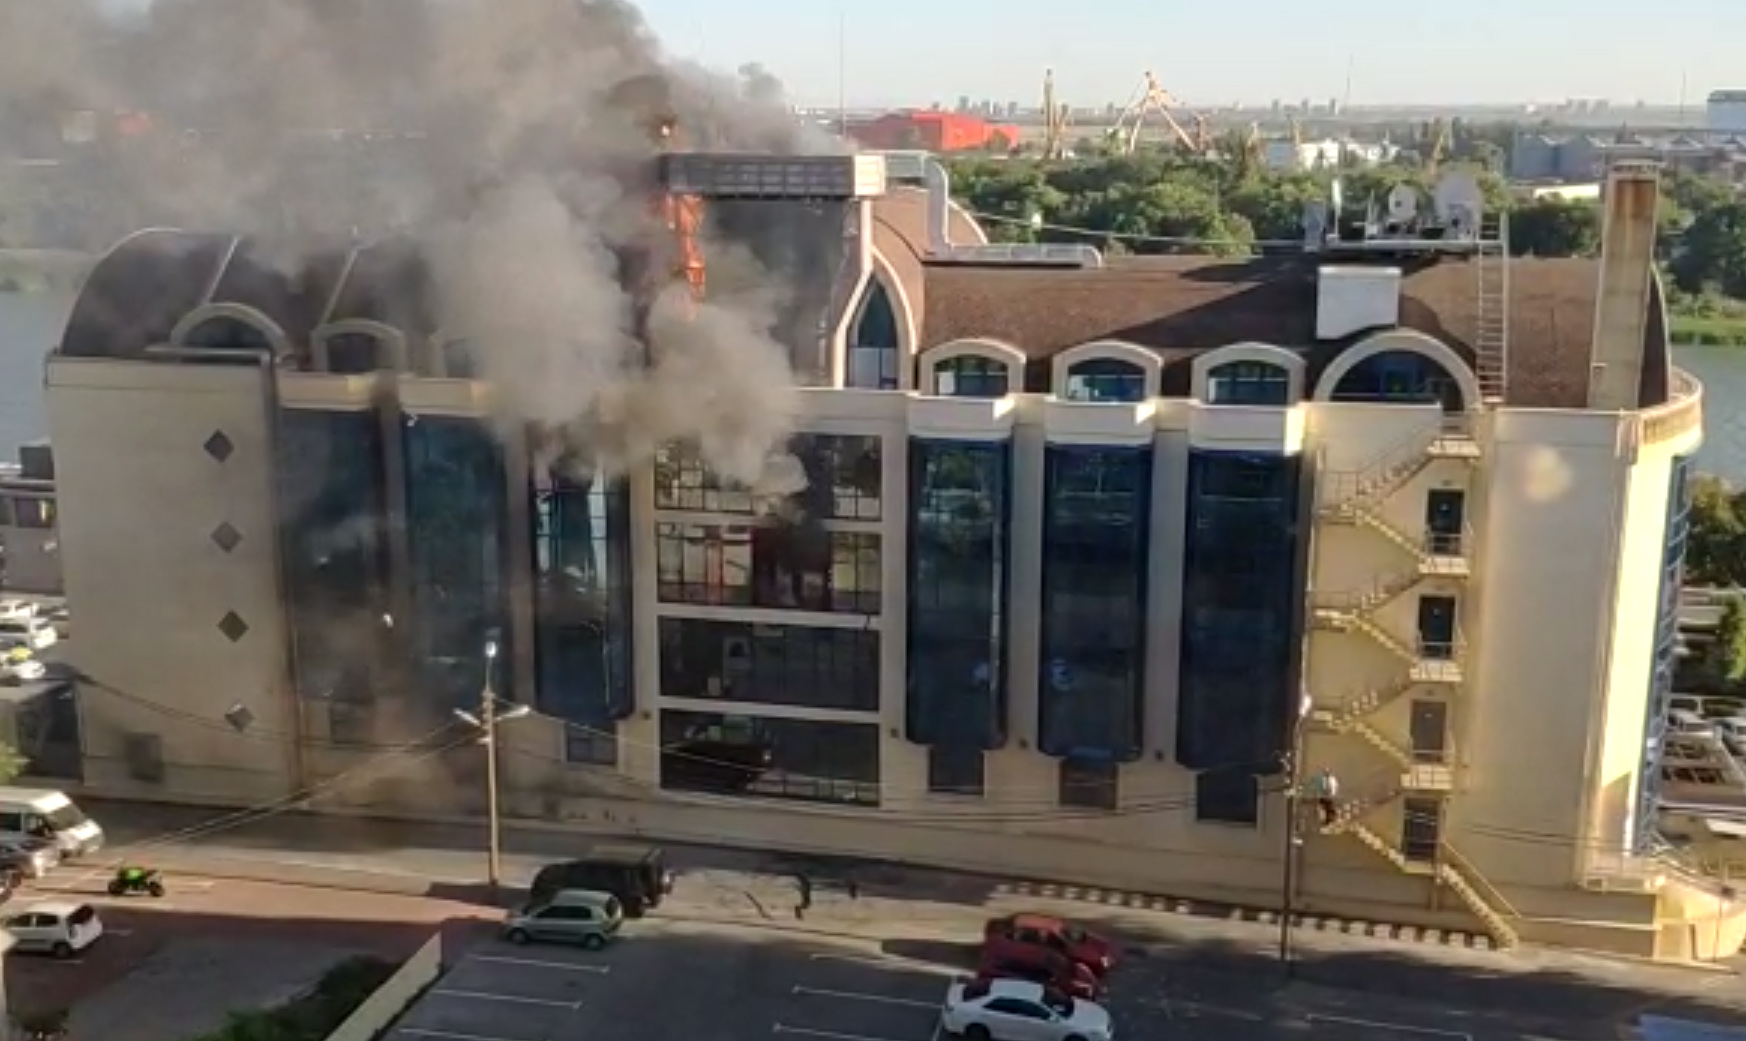 Пожар 9 сентября в гостинице "Radisson Blu Rostov-on-Don" в городе Ростове-на-Дону